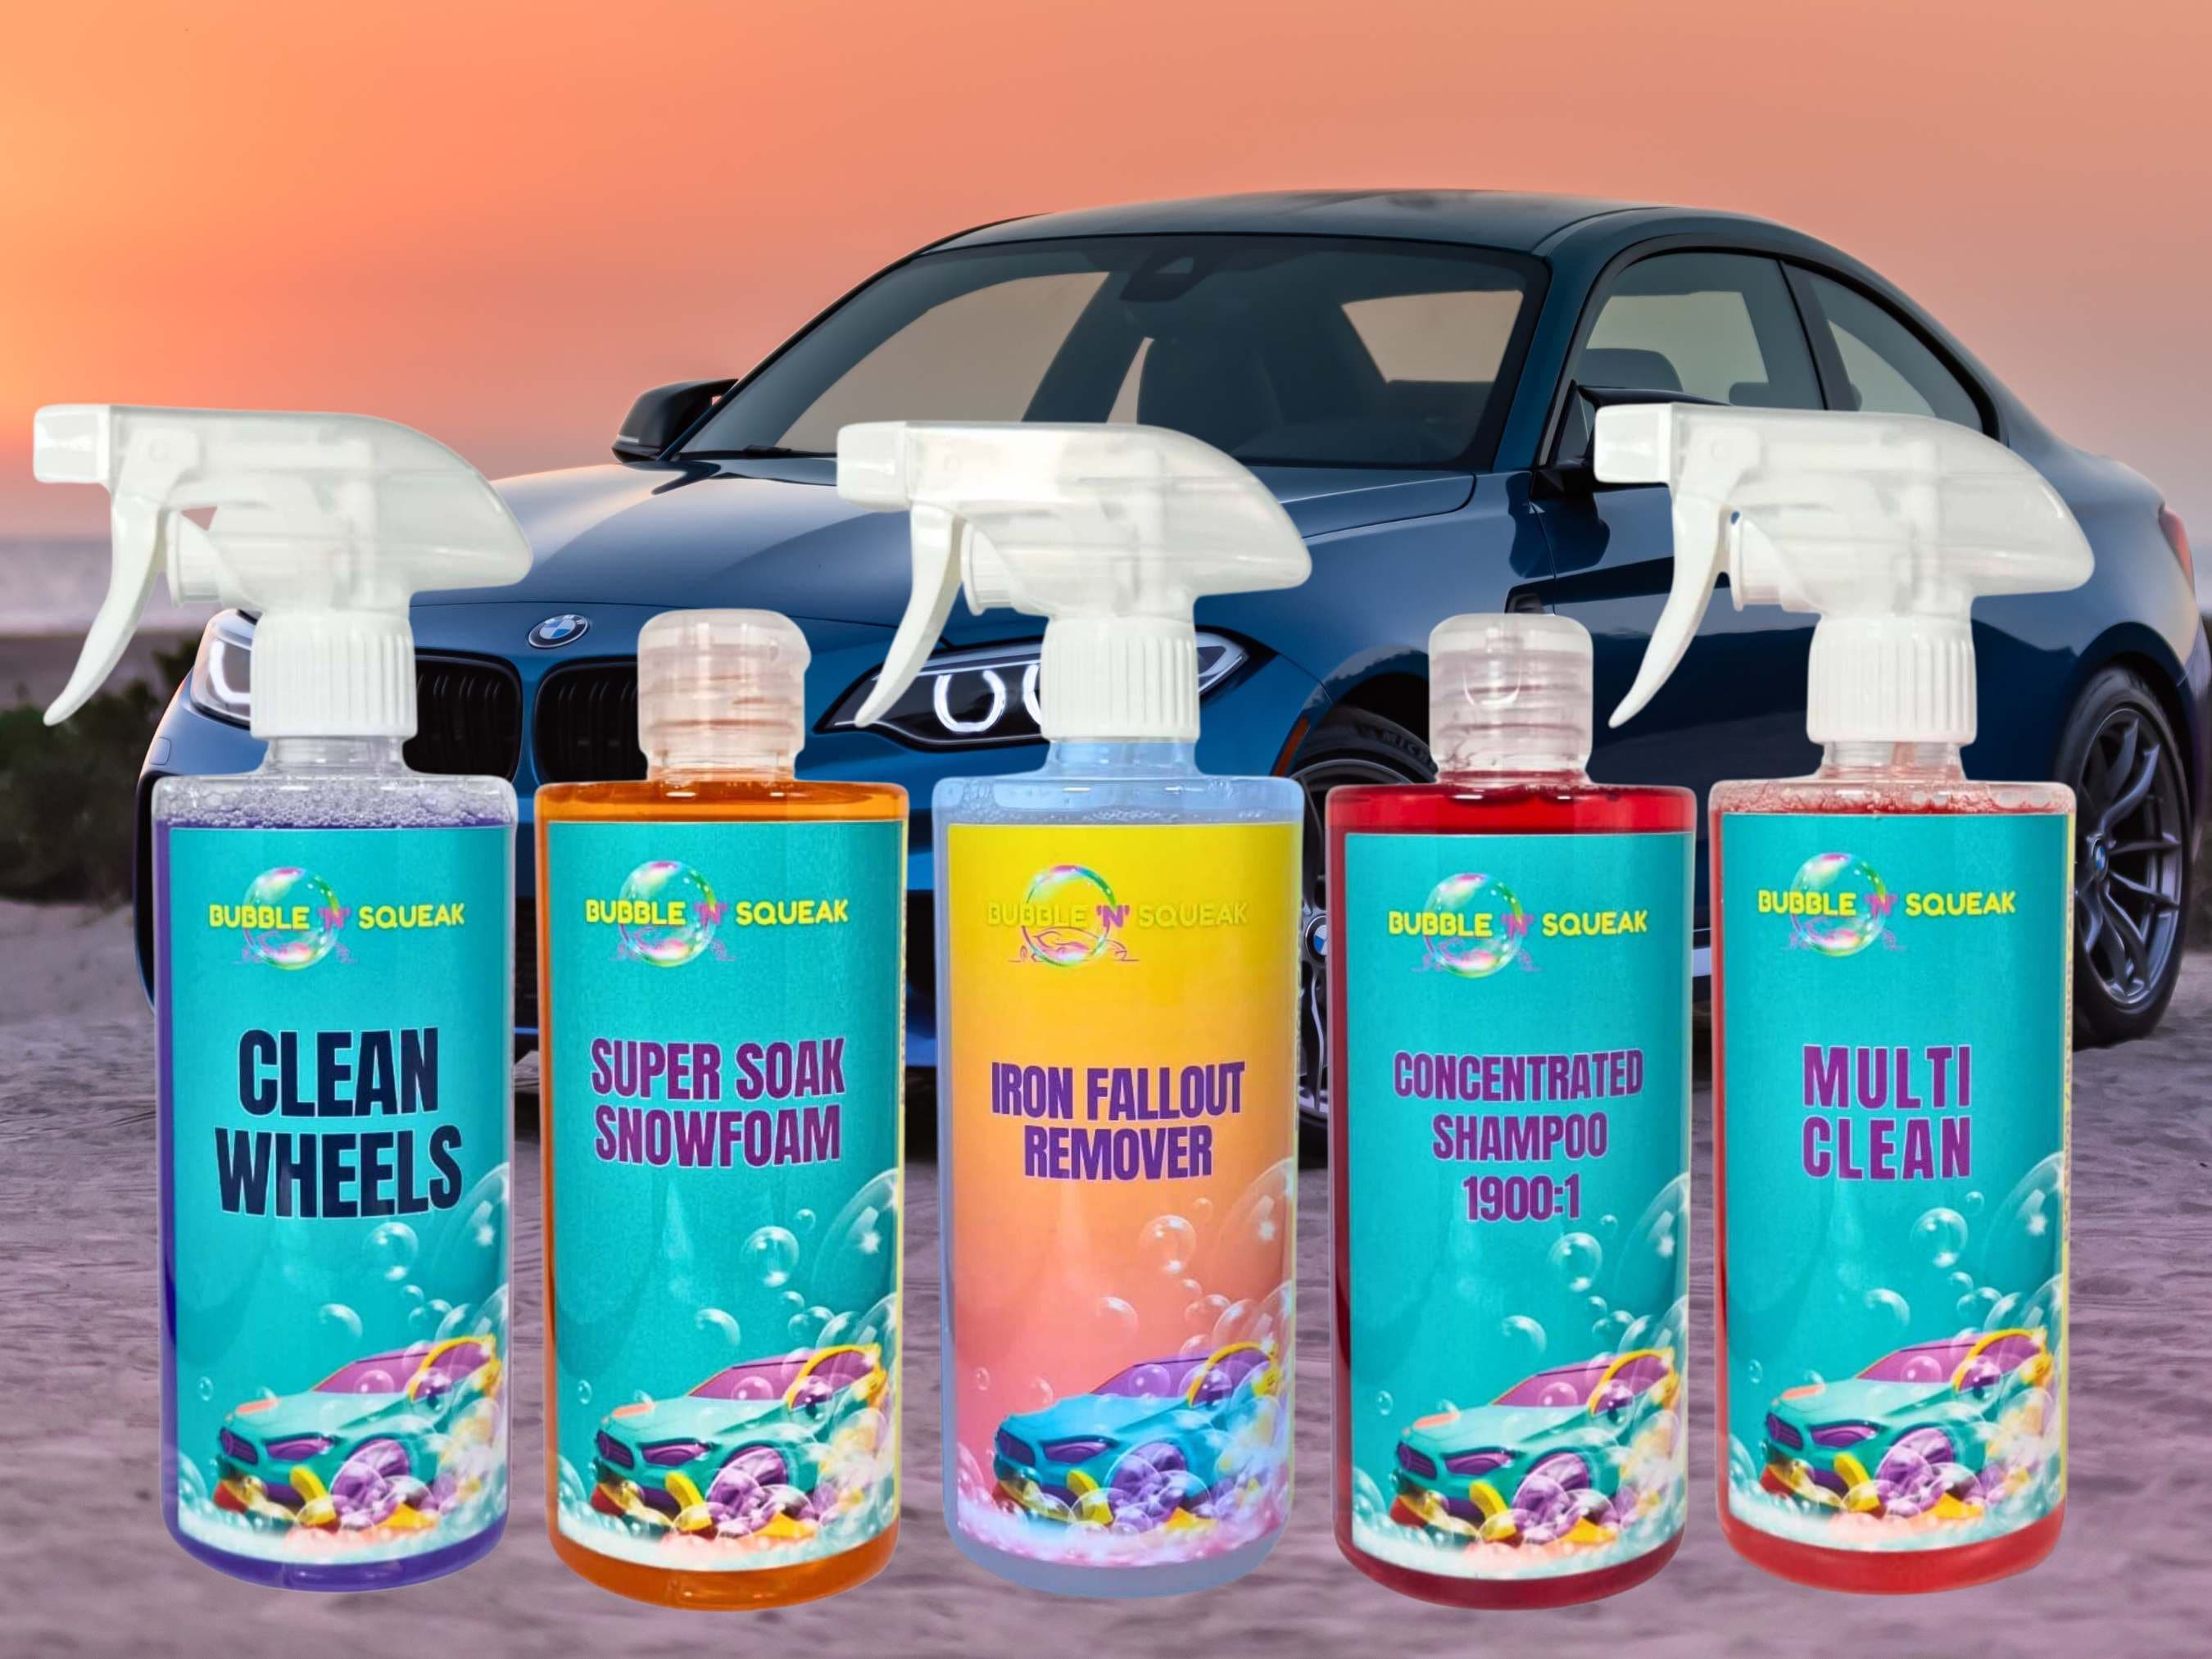 Nano Ceramic Car Paint Protect 10H Coating Kit Polish Liquid 30ml